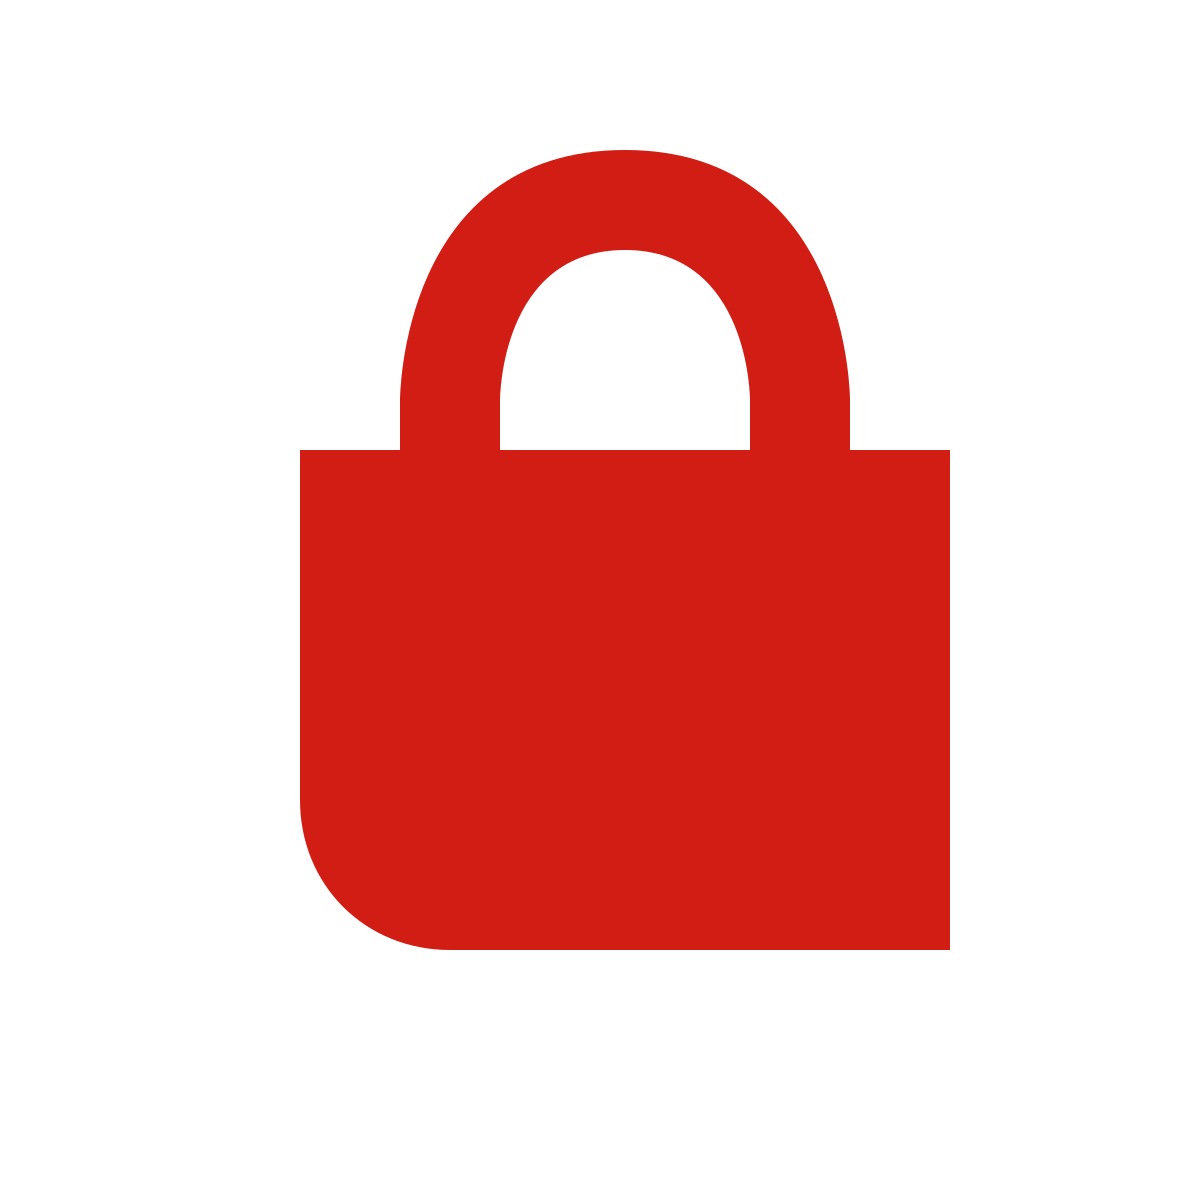 File:Locked red.svg - Wikimedia